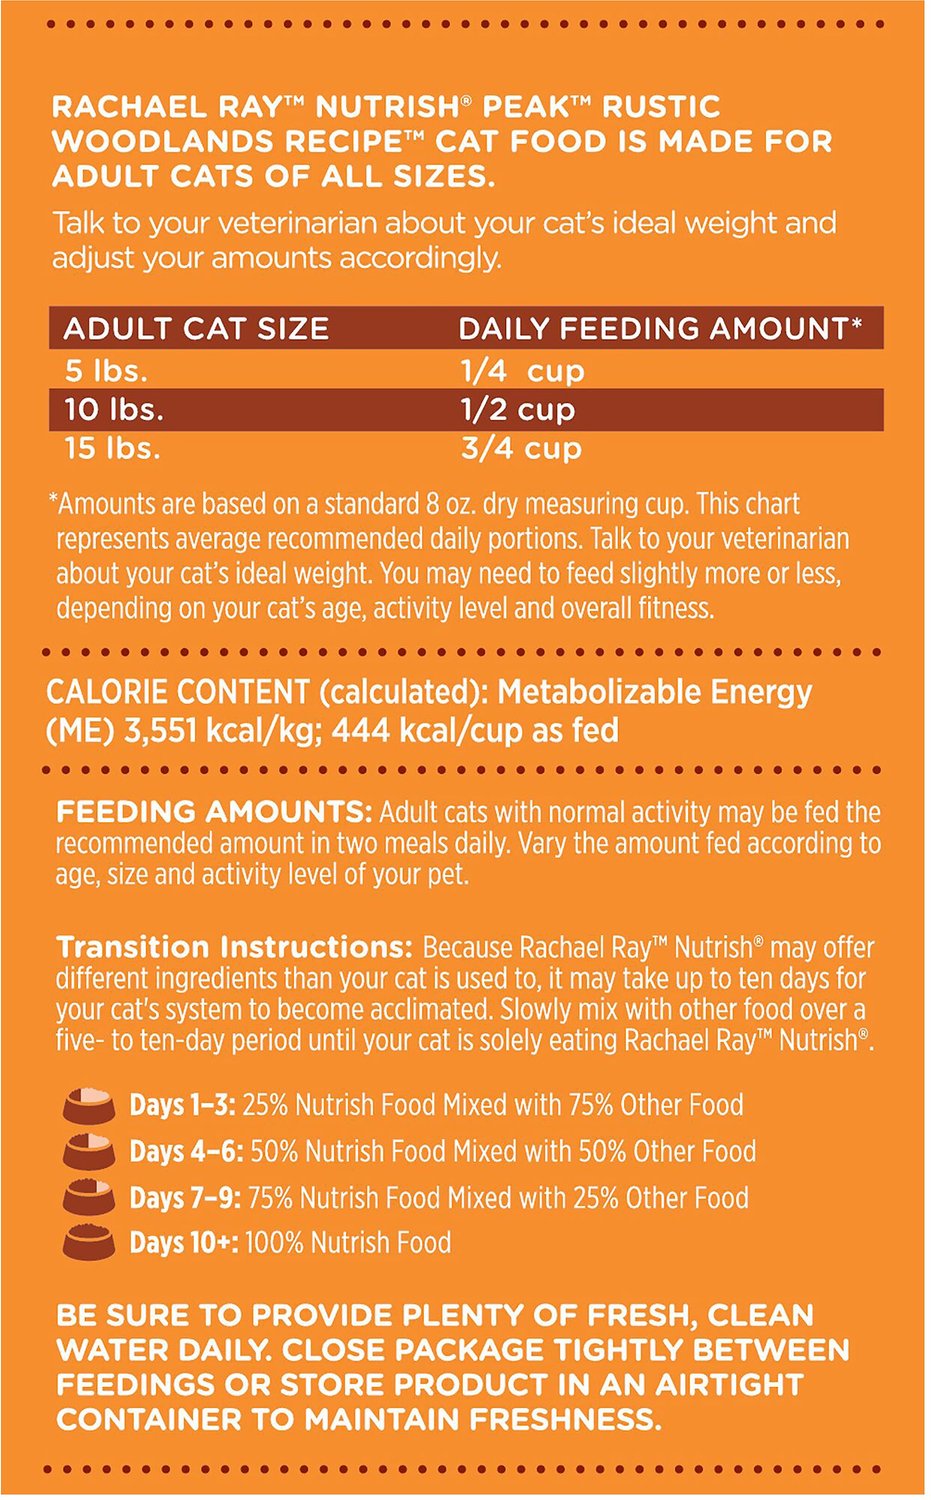 rachael ray cat food peak